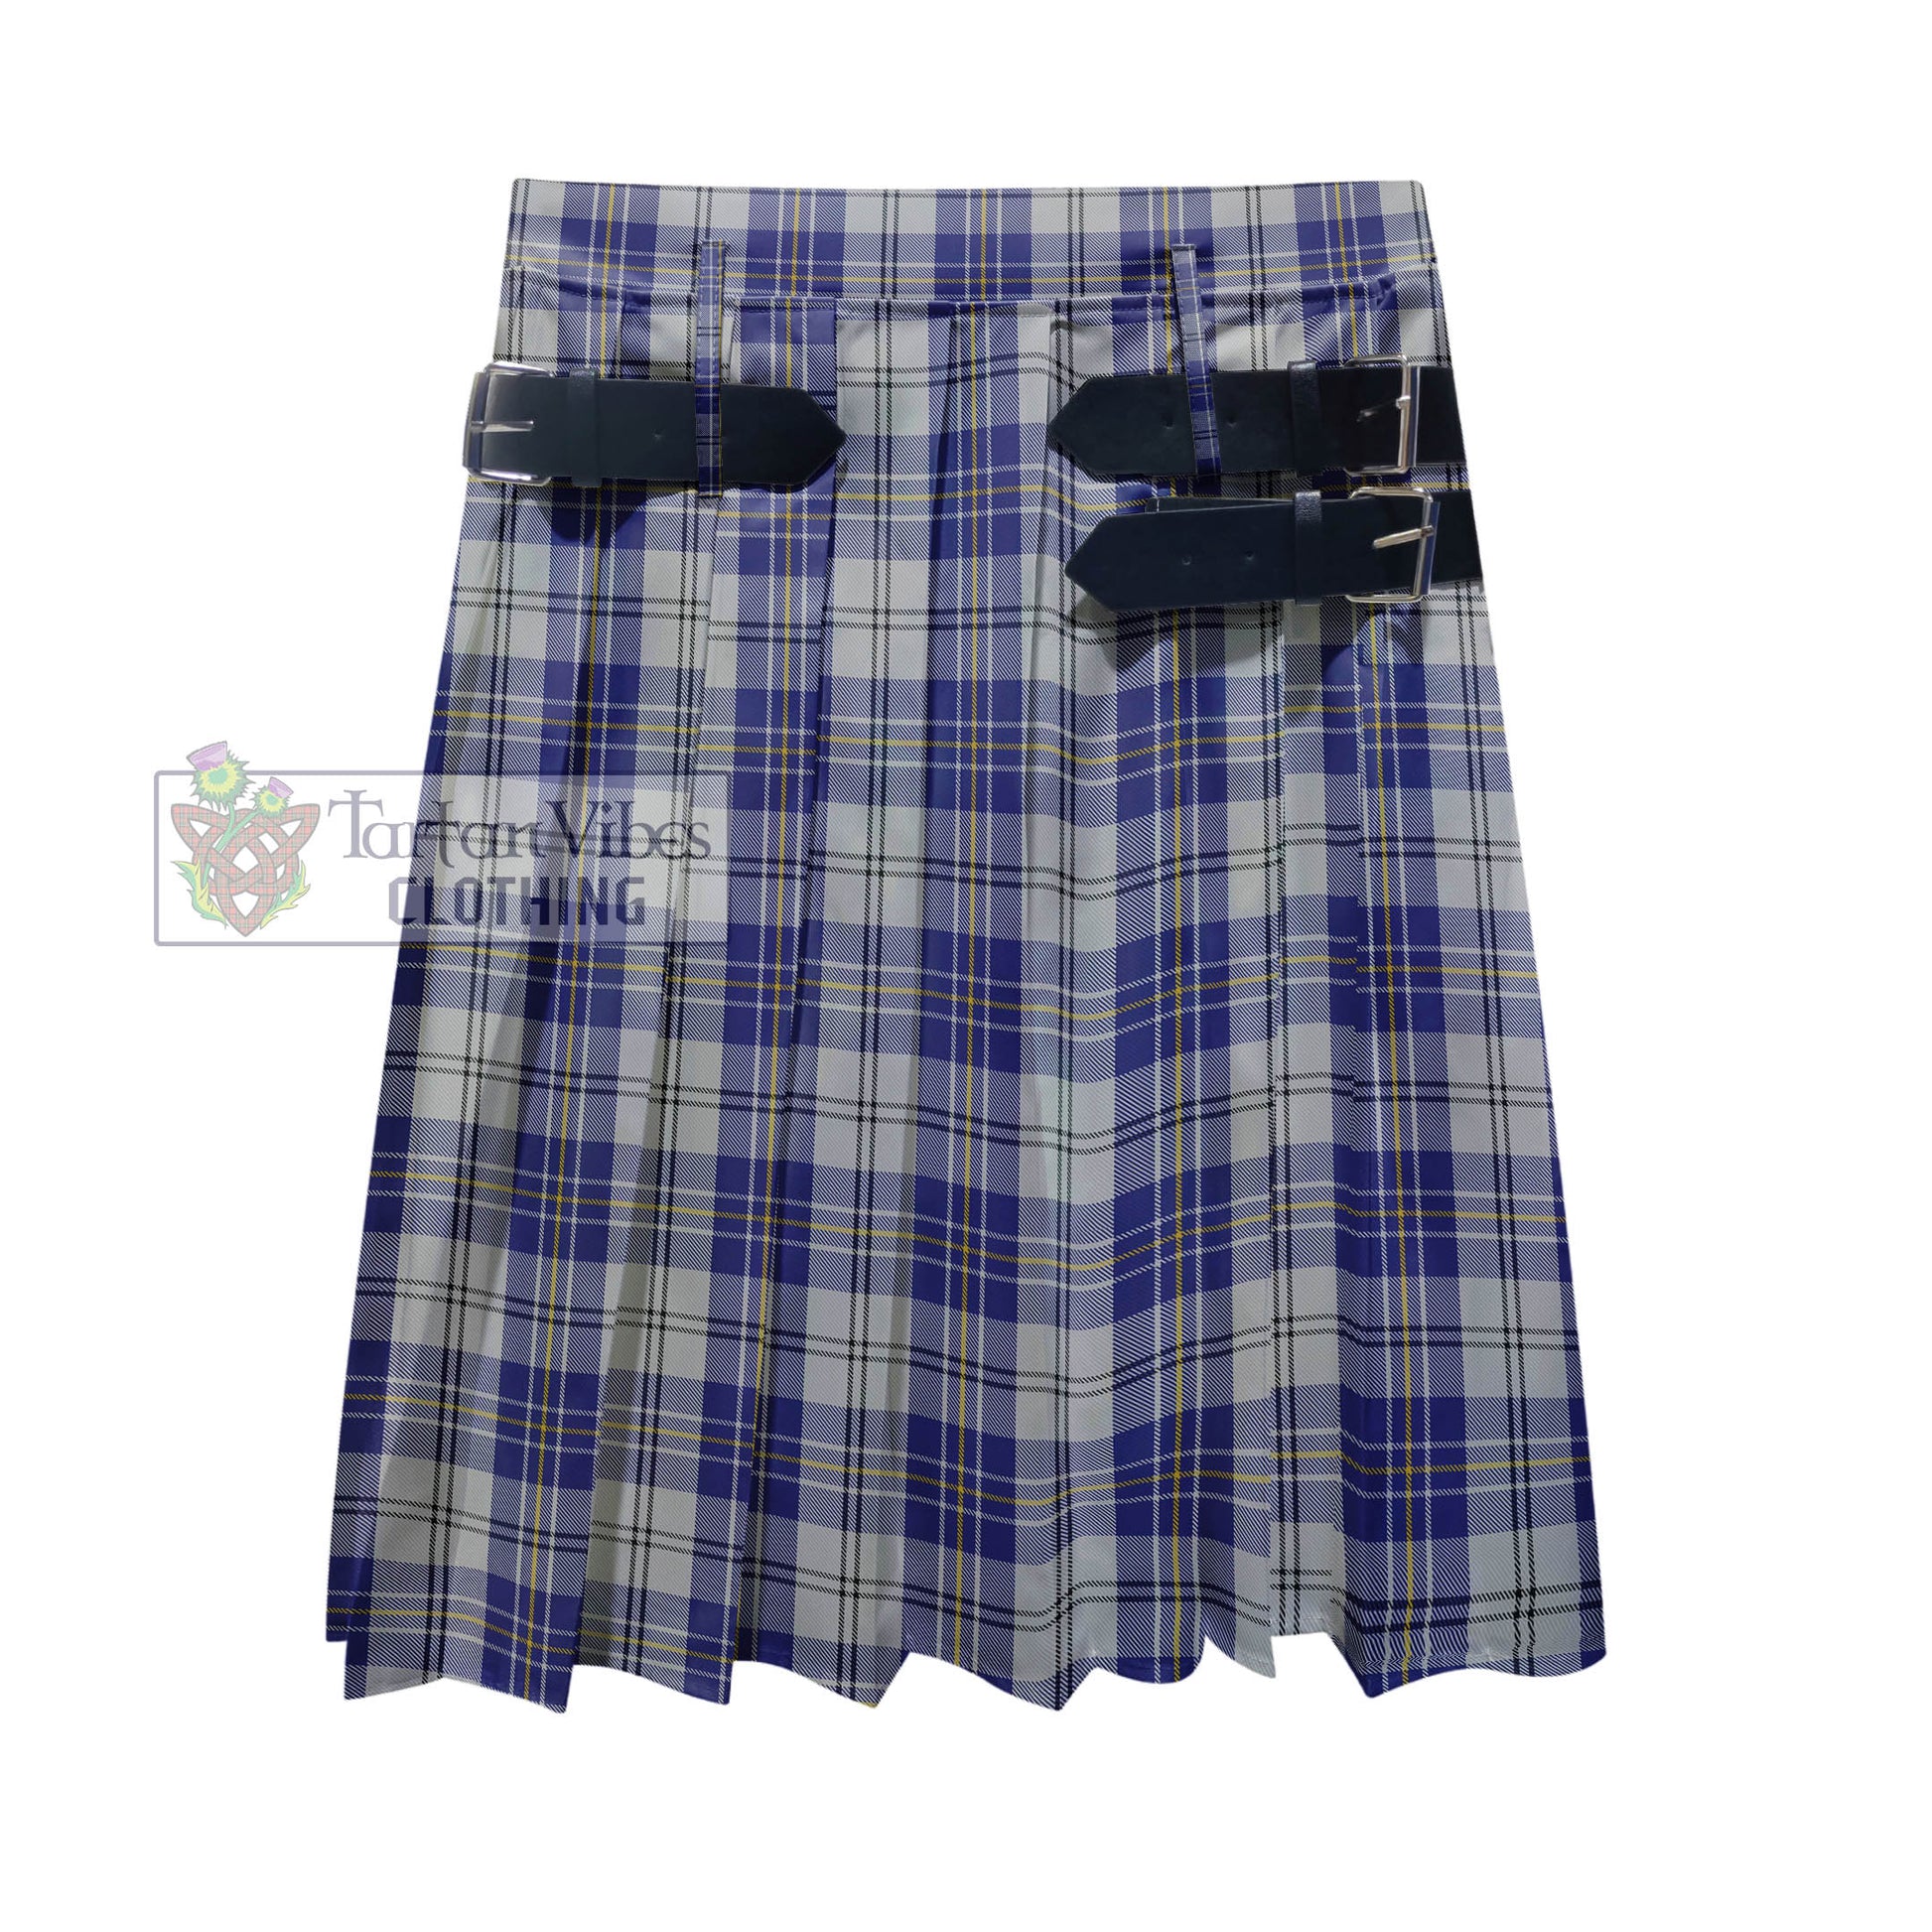 Tartan Vibes Clothing MacPherson Dress Blue Tartan Men's Pleated Skirt - Fashion Casual Retro Scottish Style